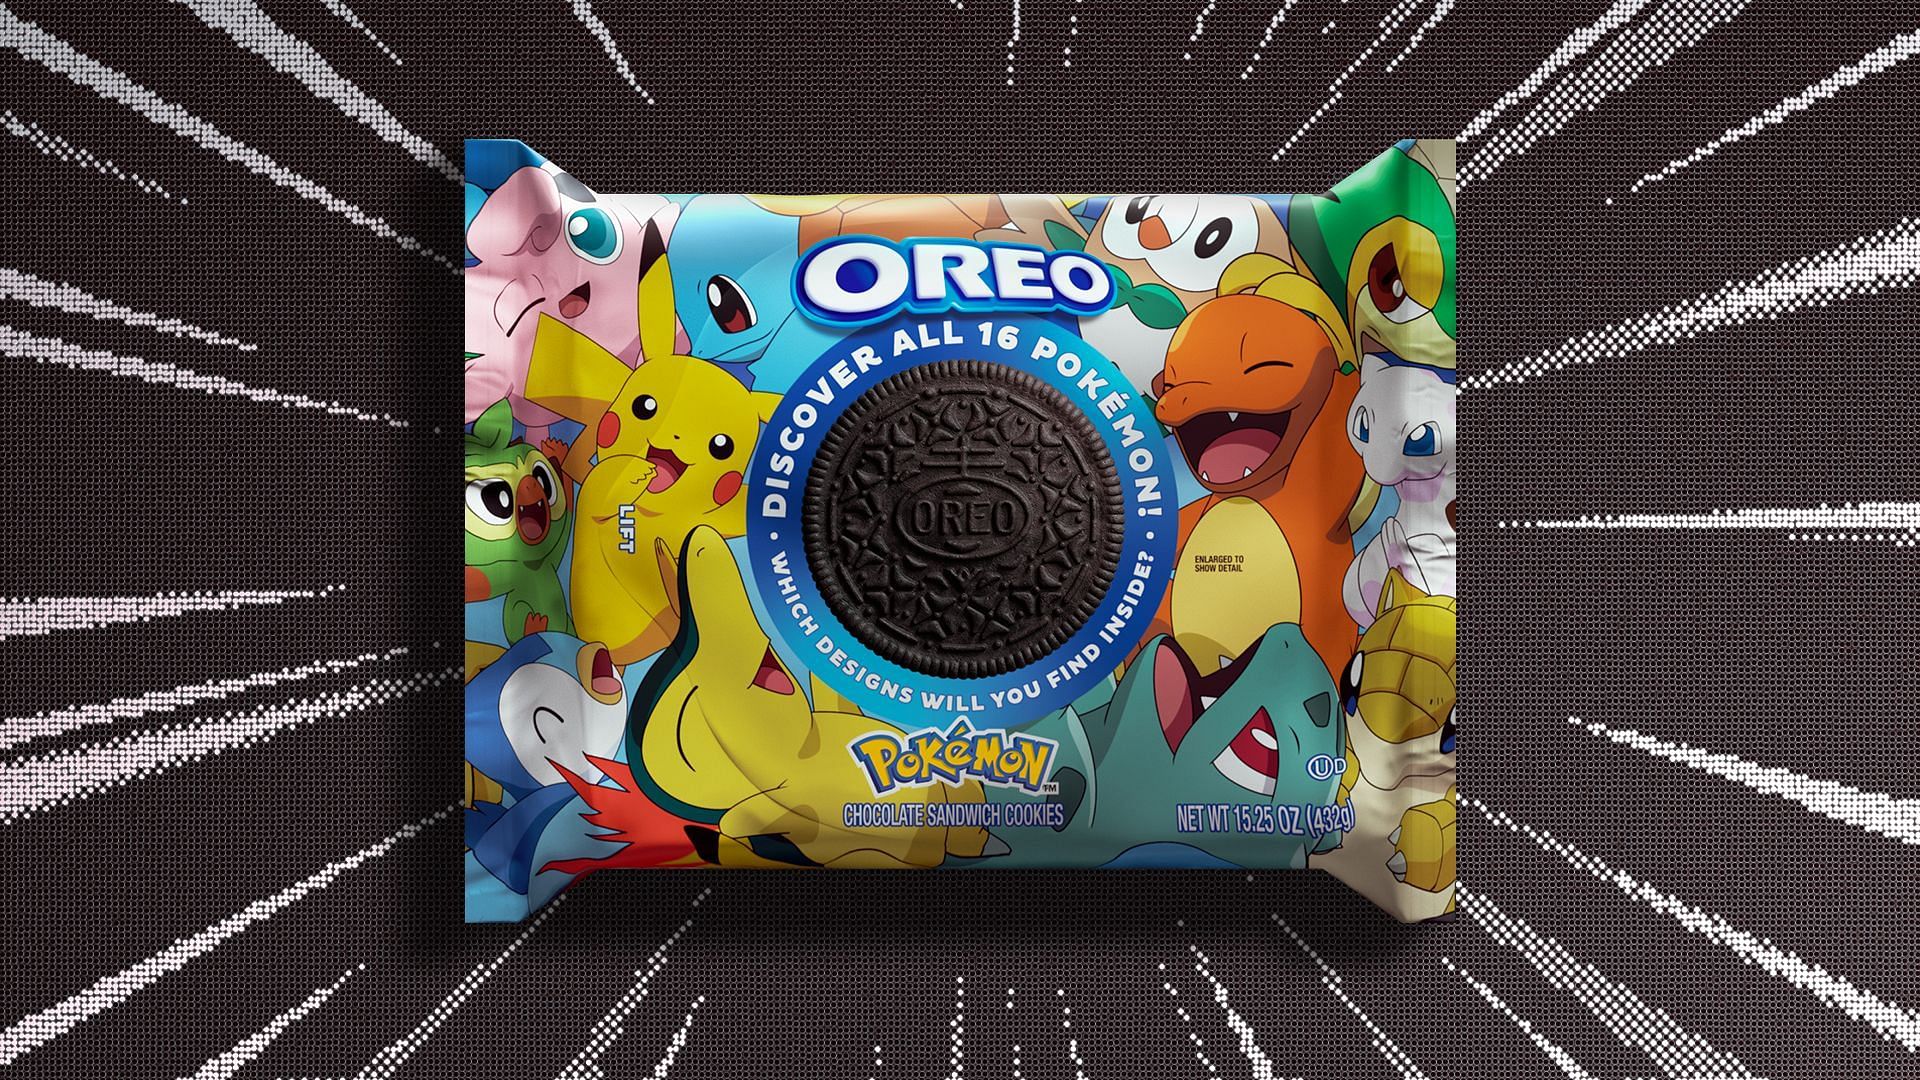 The packaging for the Pokemon Oreos (Image via Mondelez International)